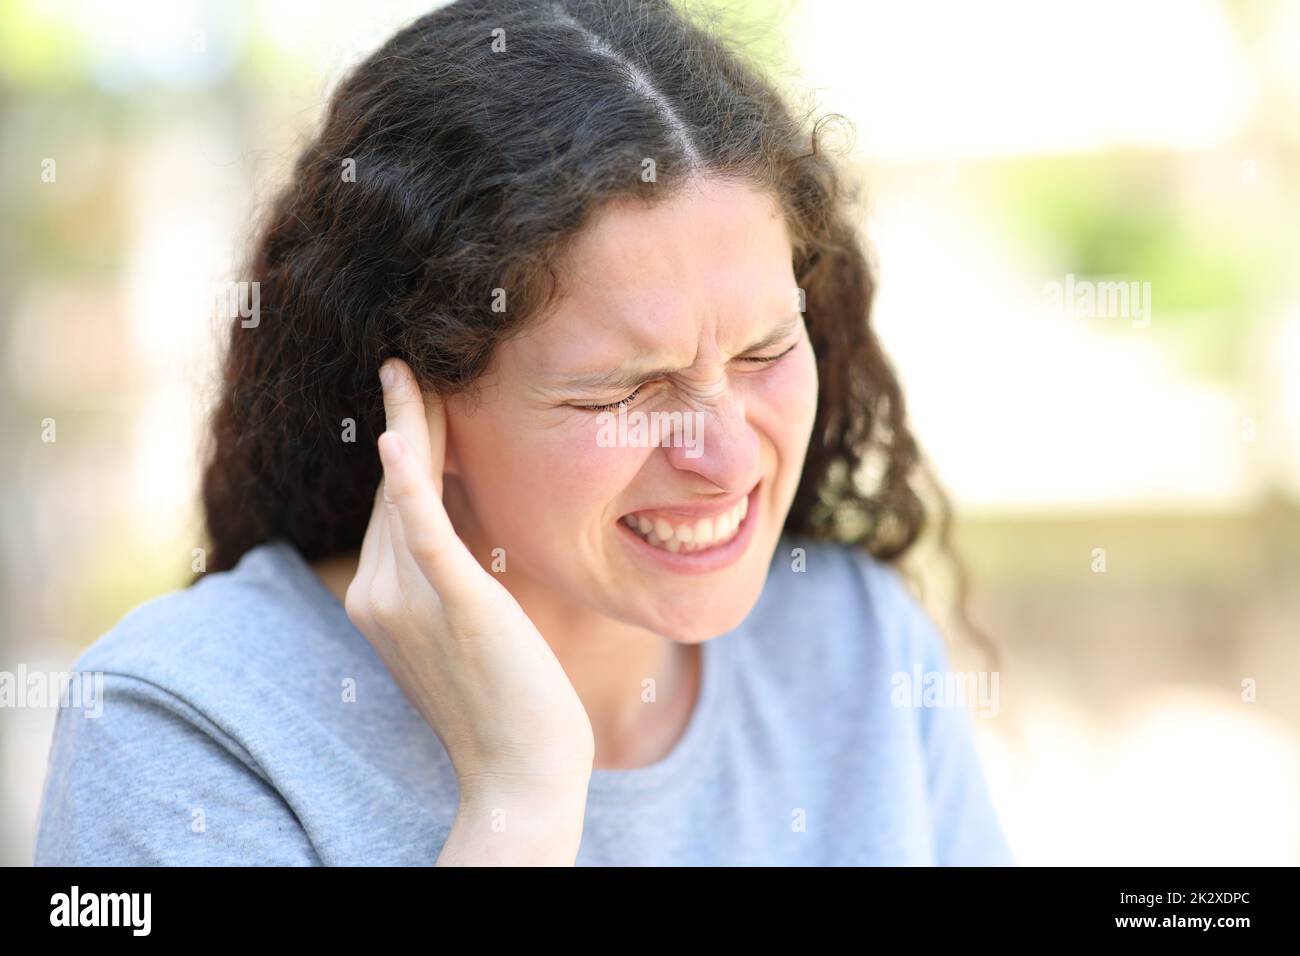 Woman complaining suffering ear ache Stock Photo